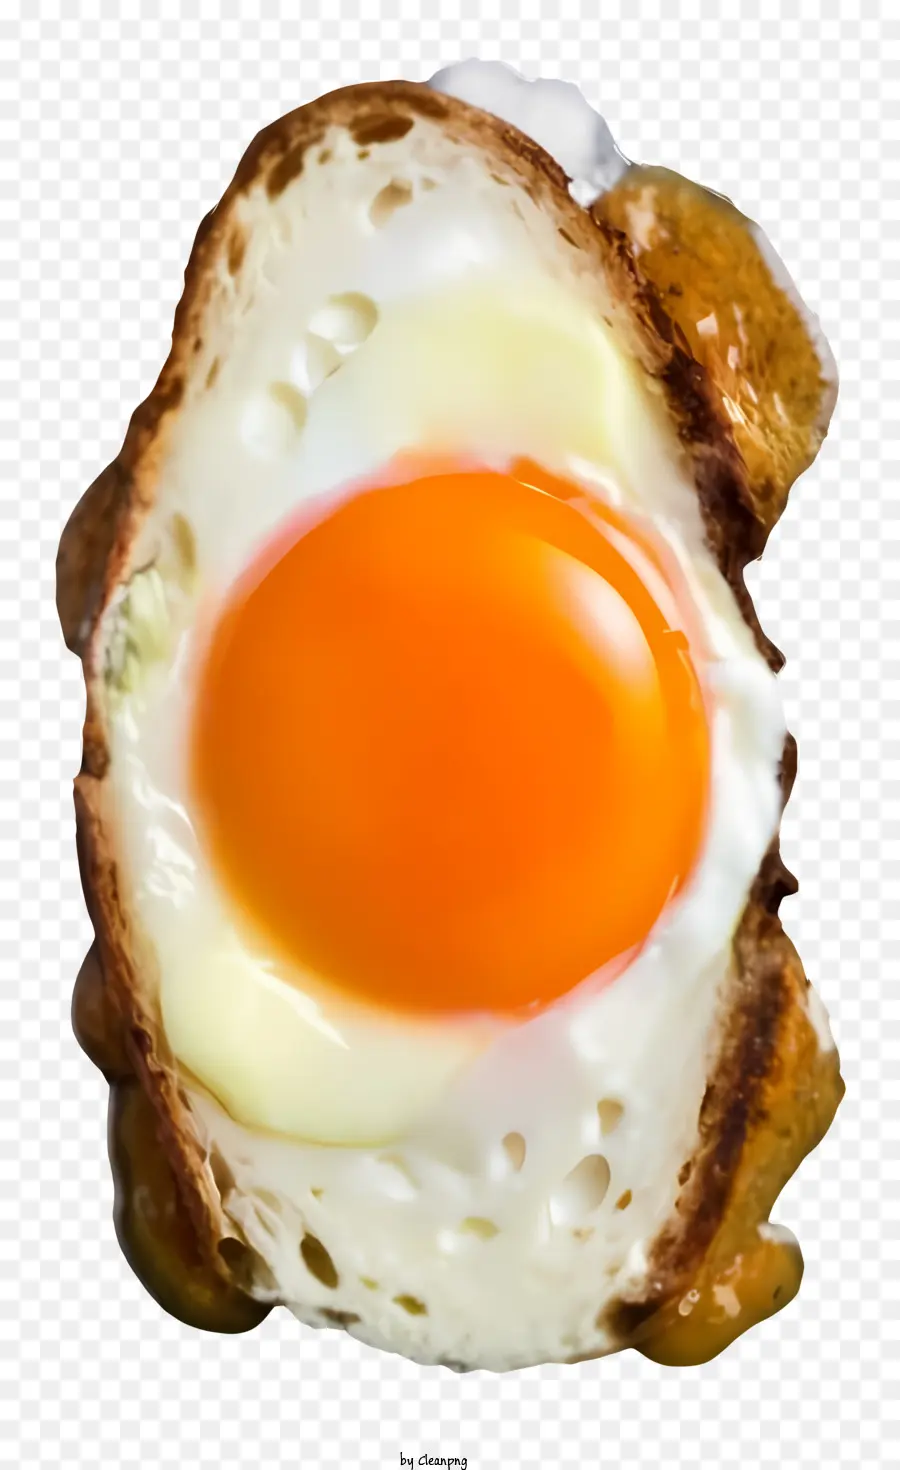 egg yolk toasted bread crispy texture smearing egg yolk white crispy